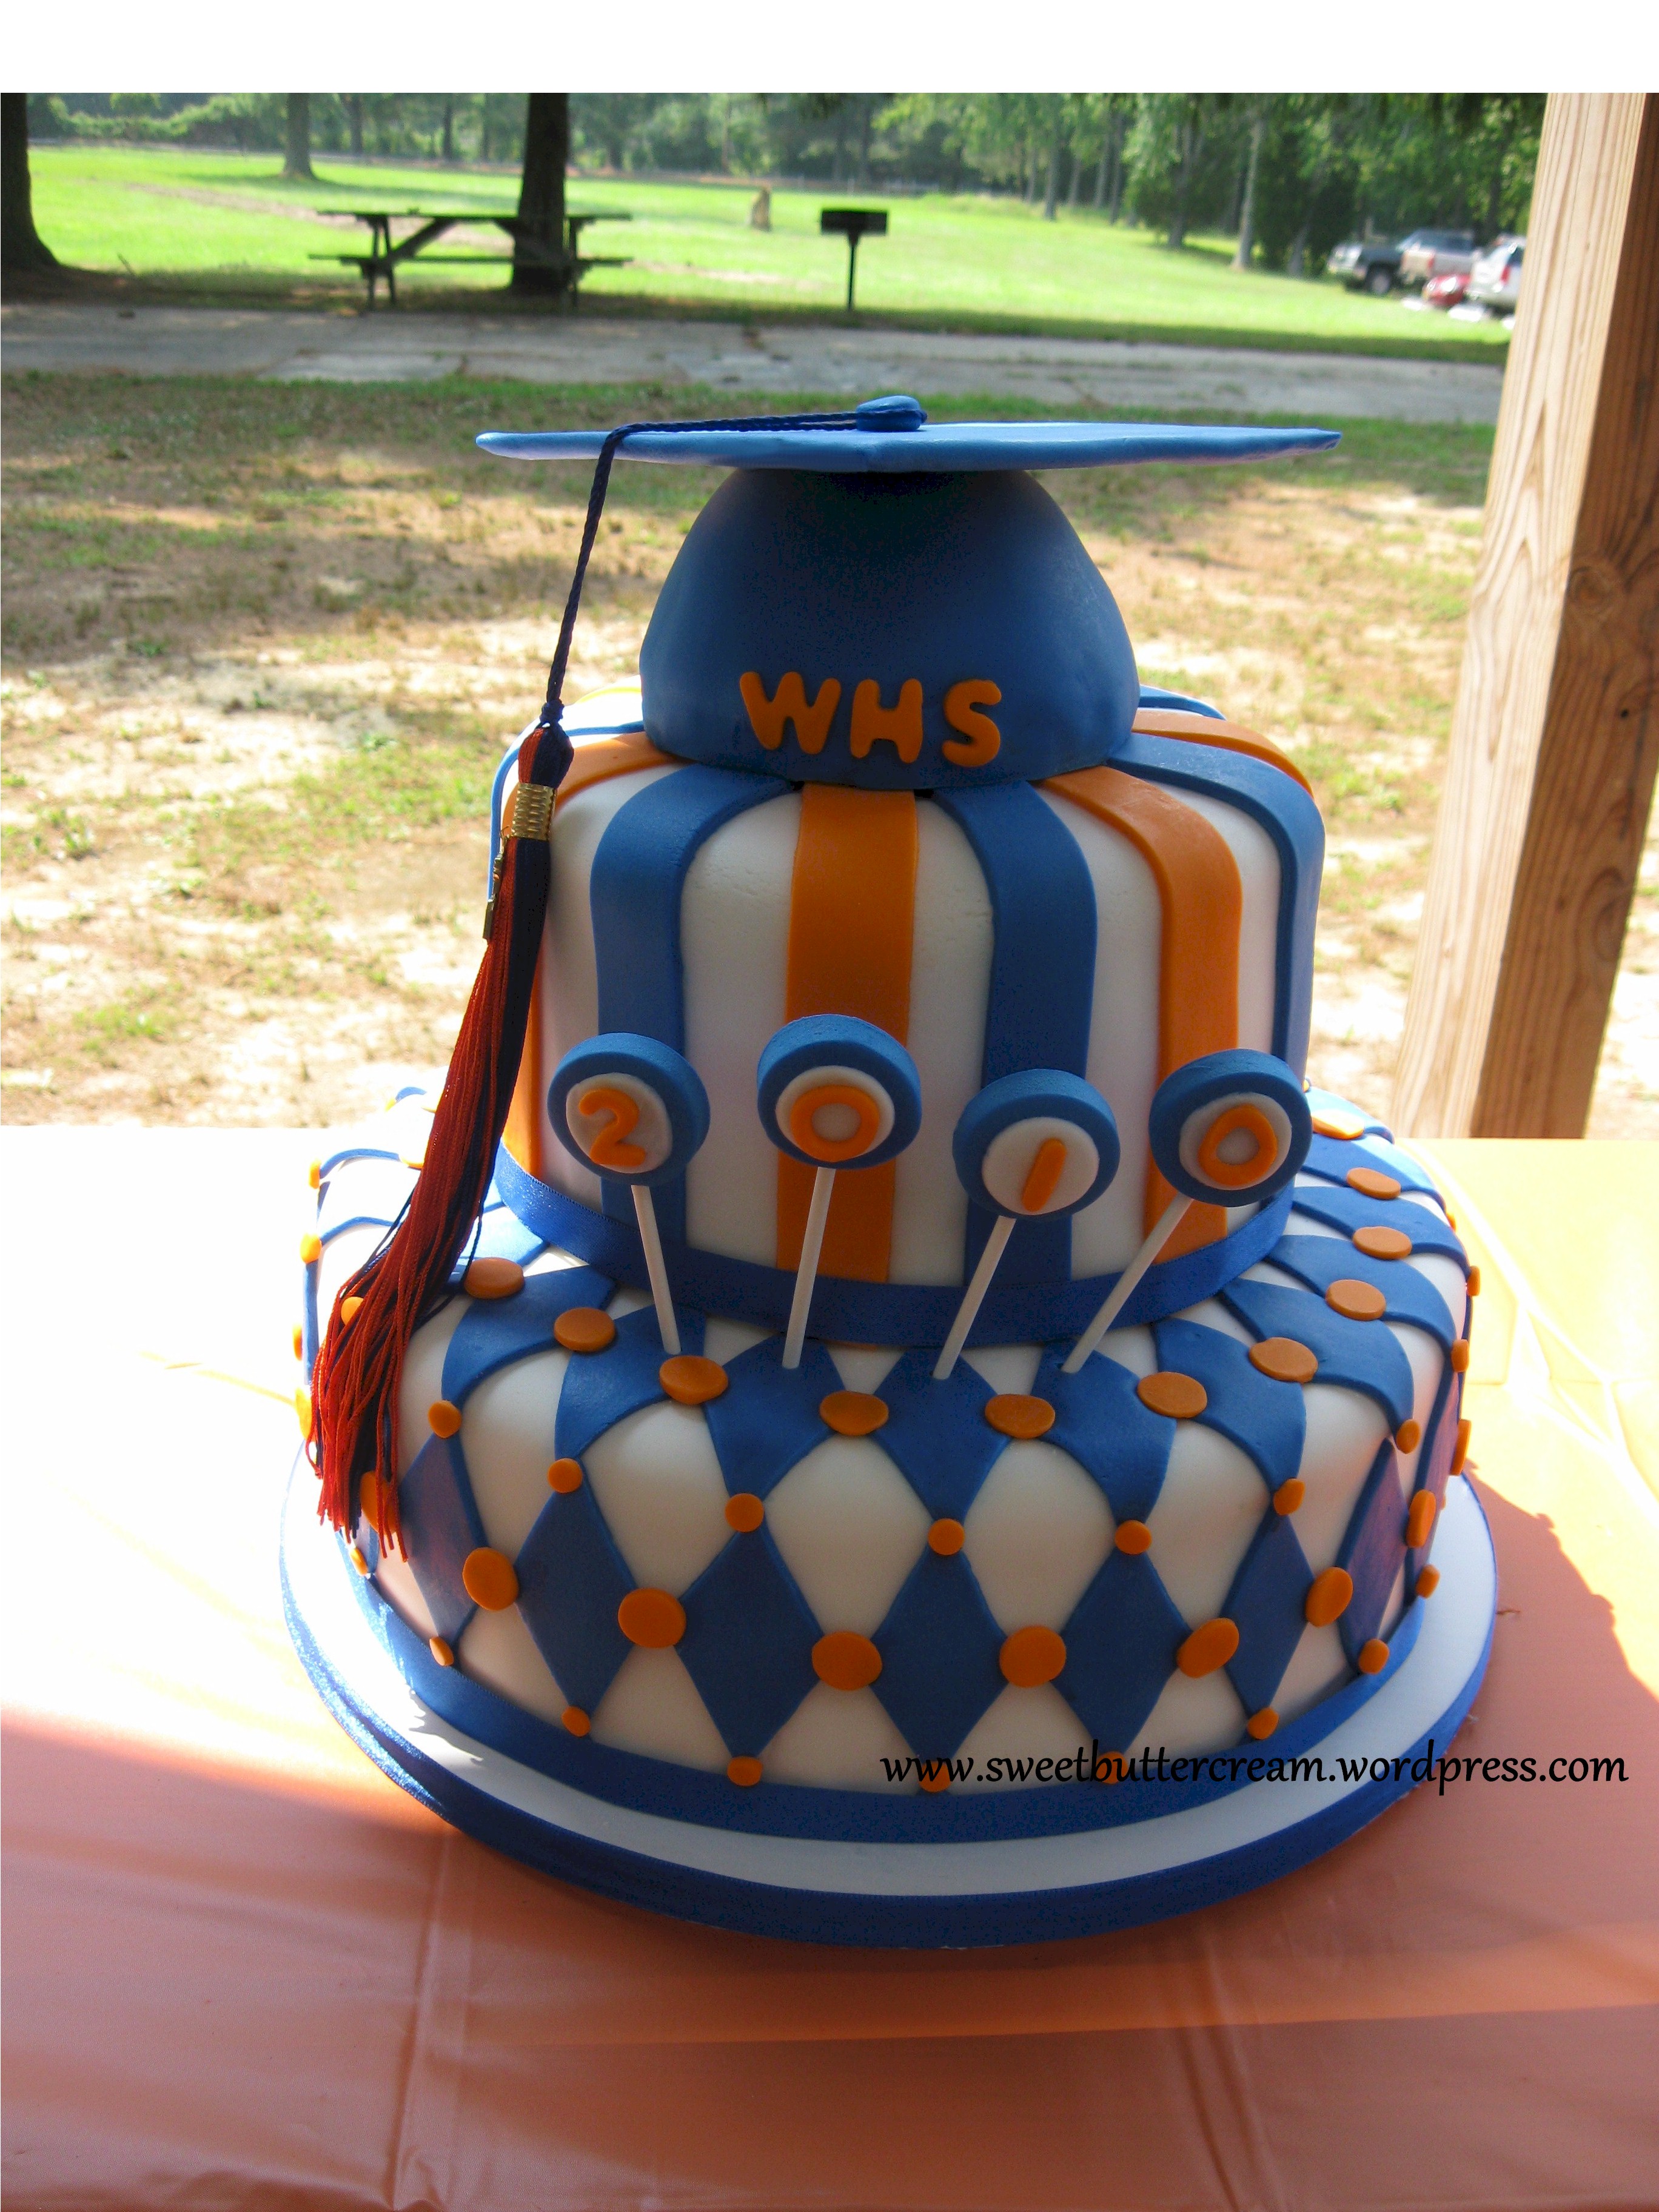 6 Photos of Blue And Orange Graduation Cakes 2014